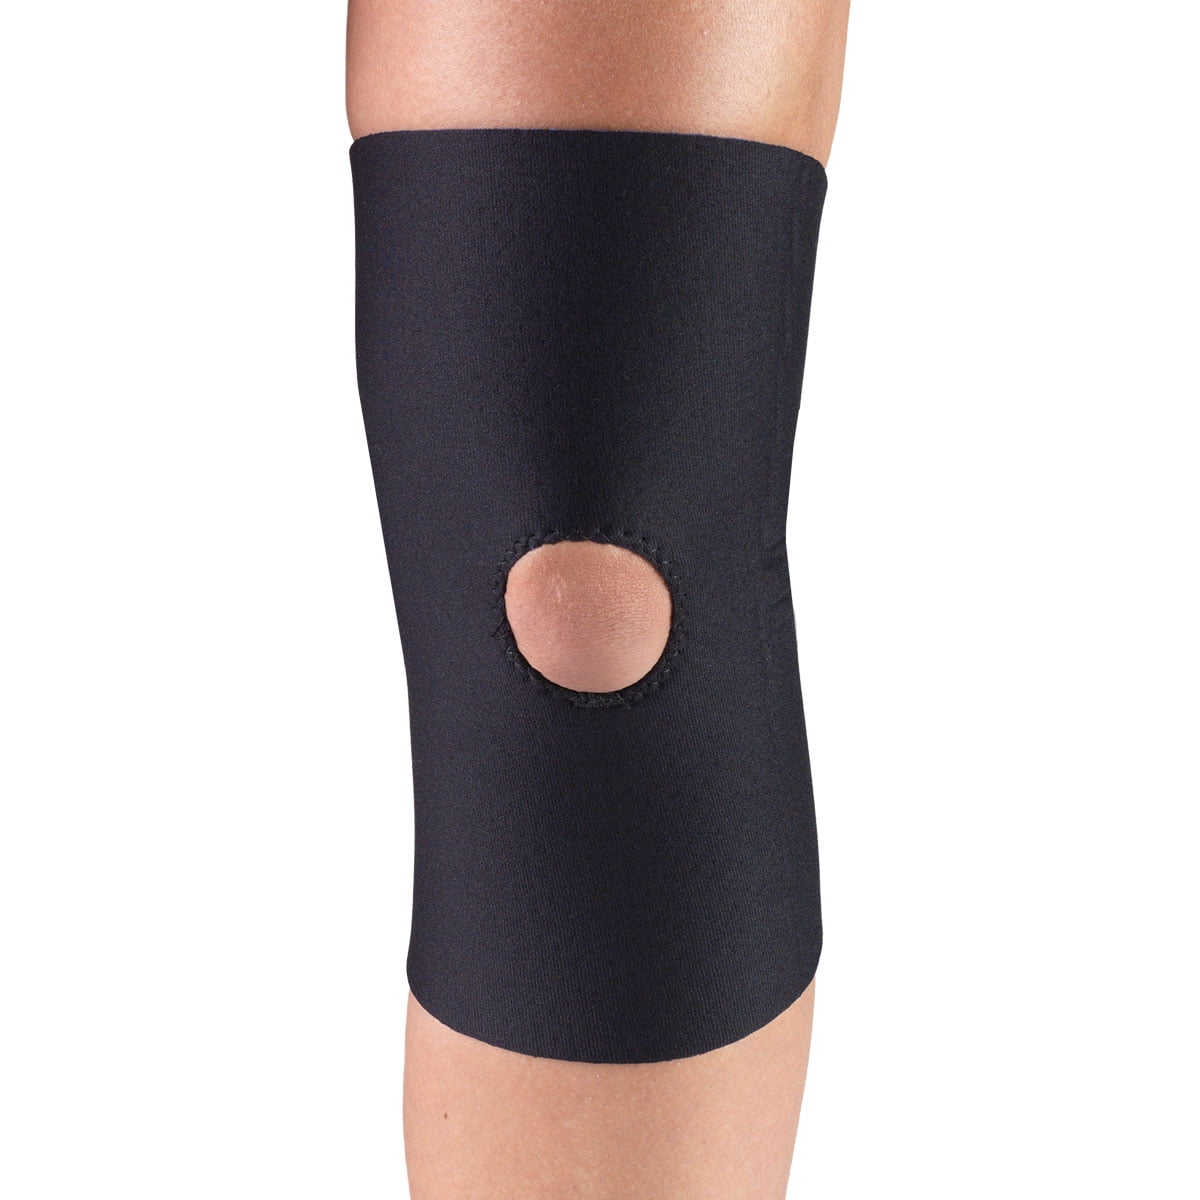 OTC Neoprene Knee Support - Open Patella, Black, 2X-Large